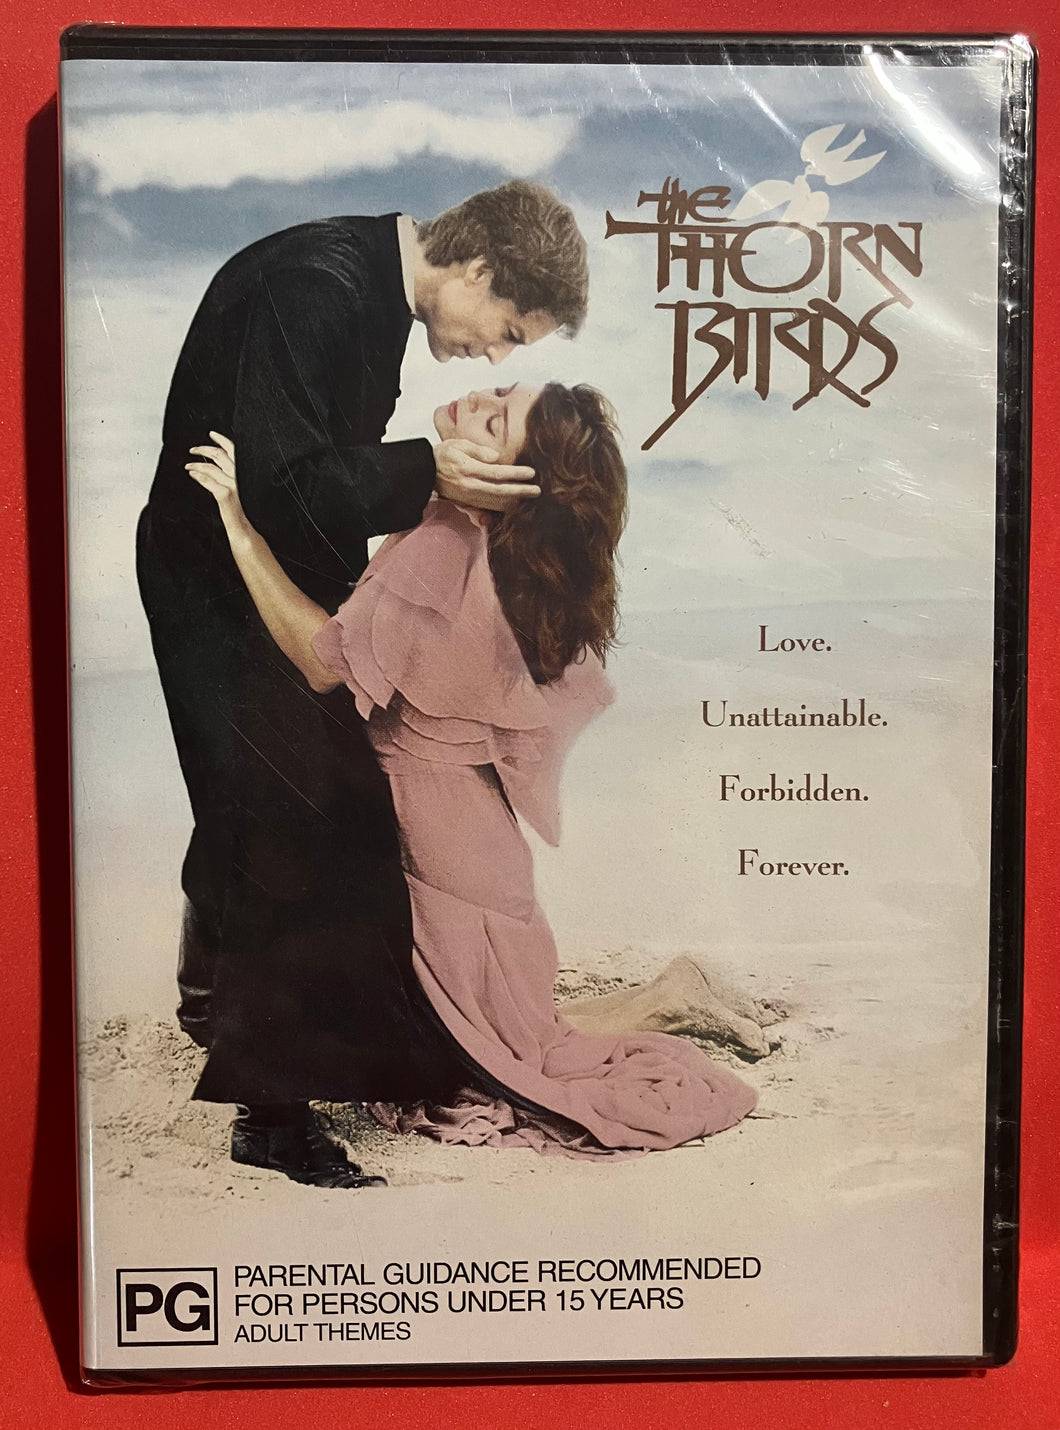 thorn birds dvd